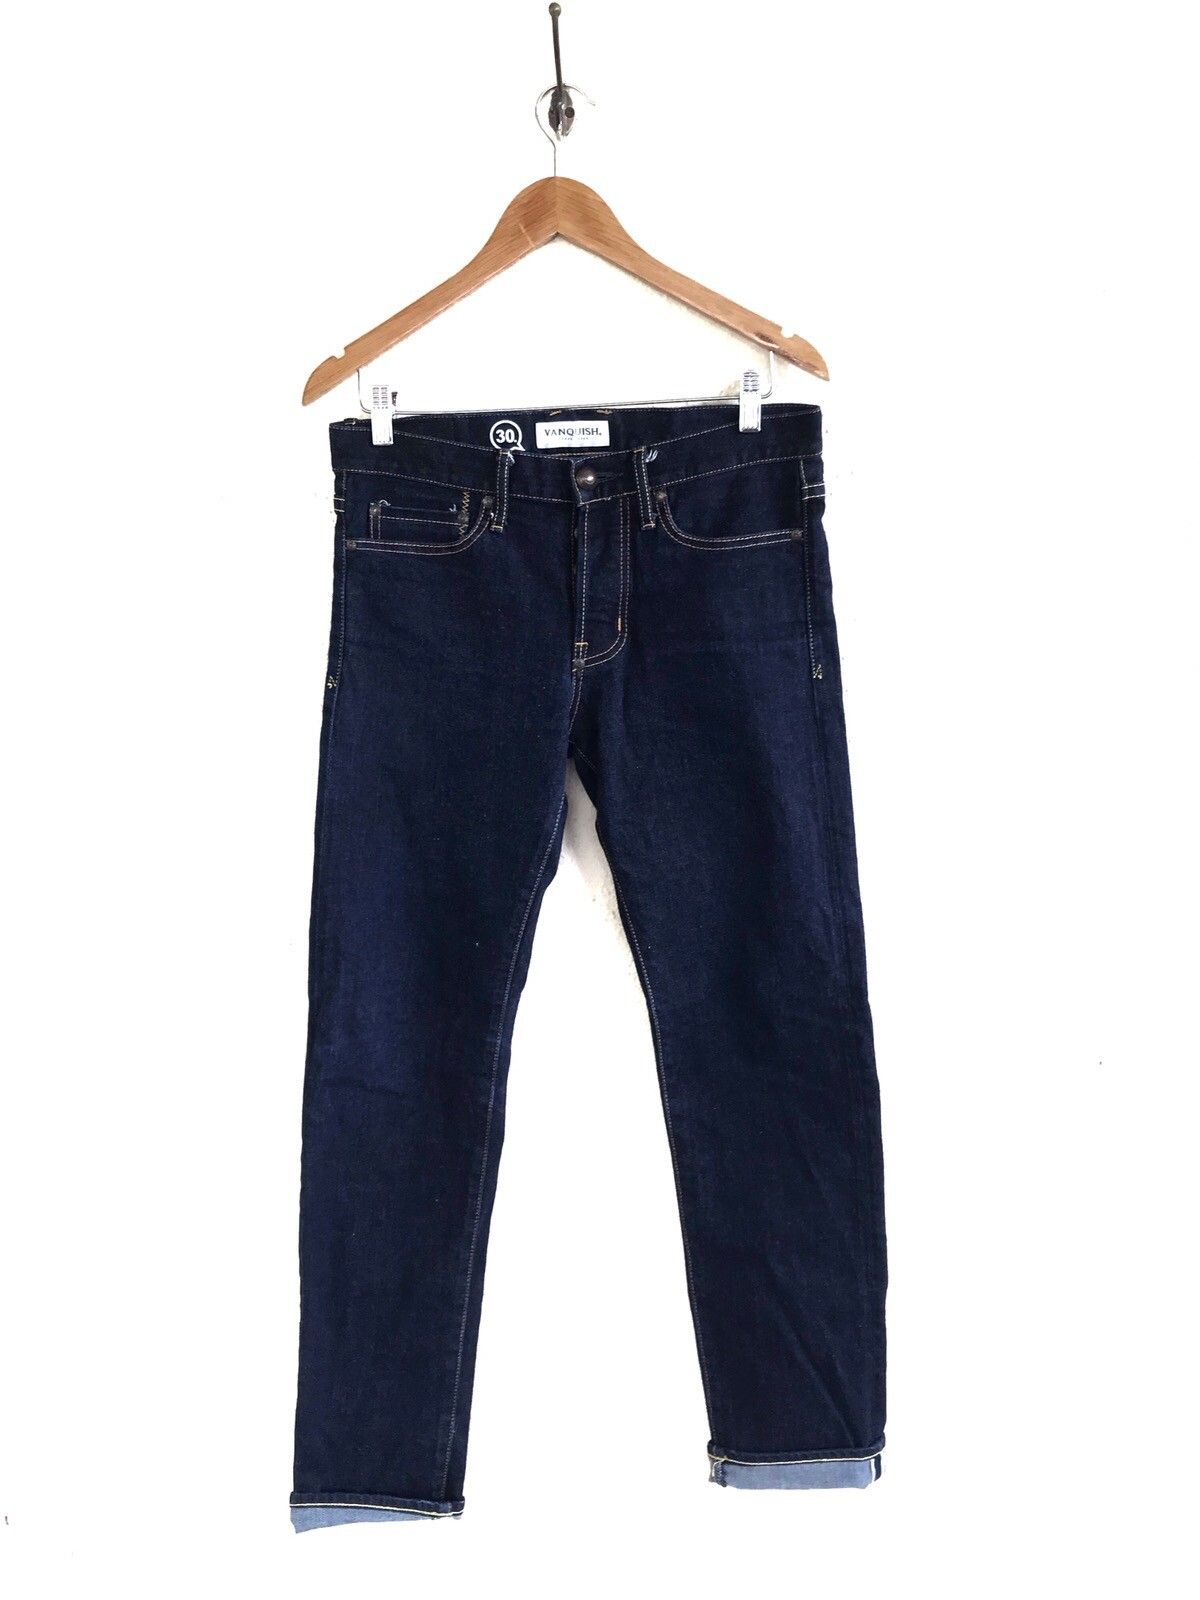 VANQUISH Japan Selvedge Skinny Jeans - 1